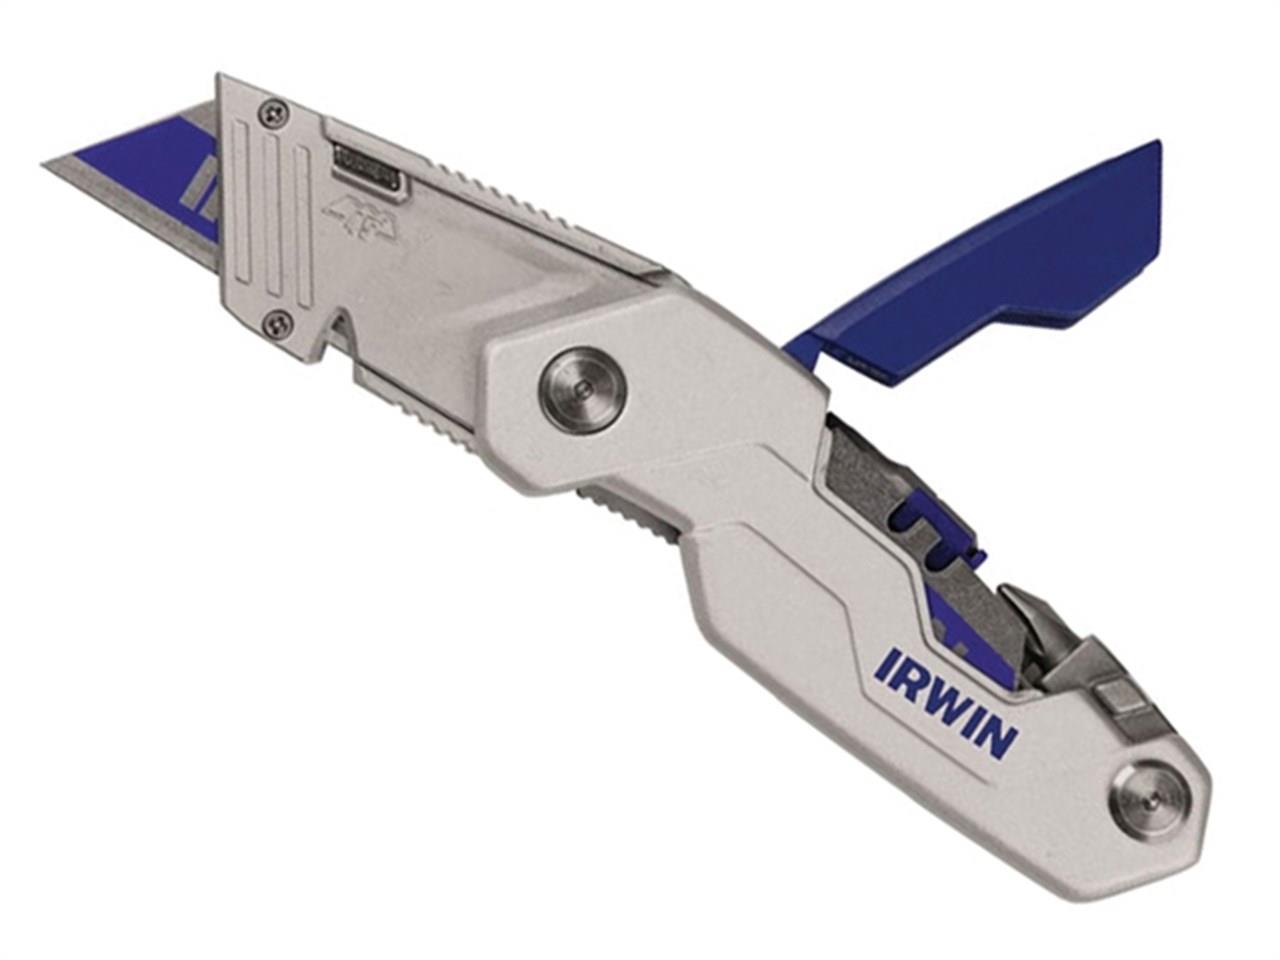 IRWIN FK250 Folding Utility Knife